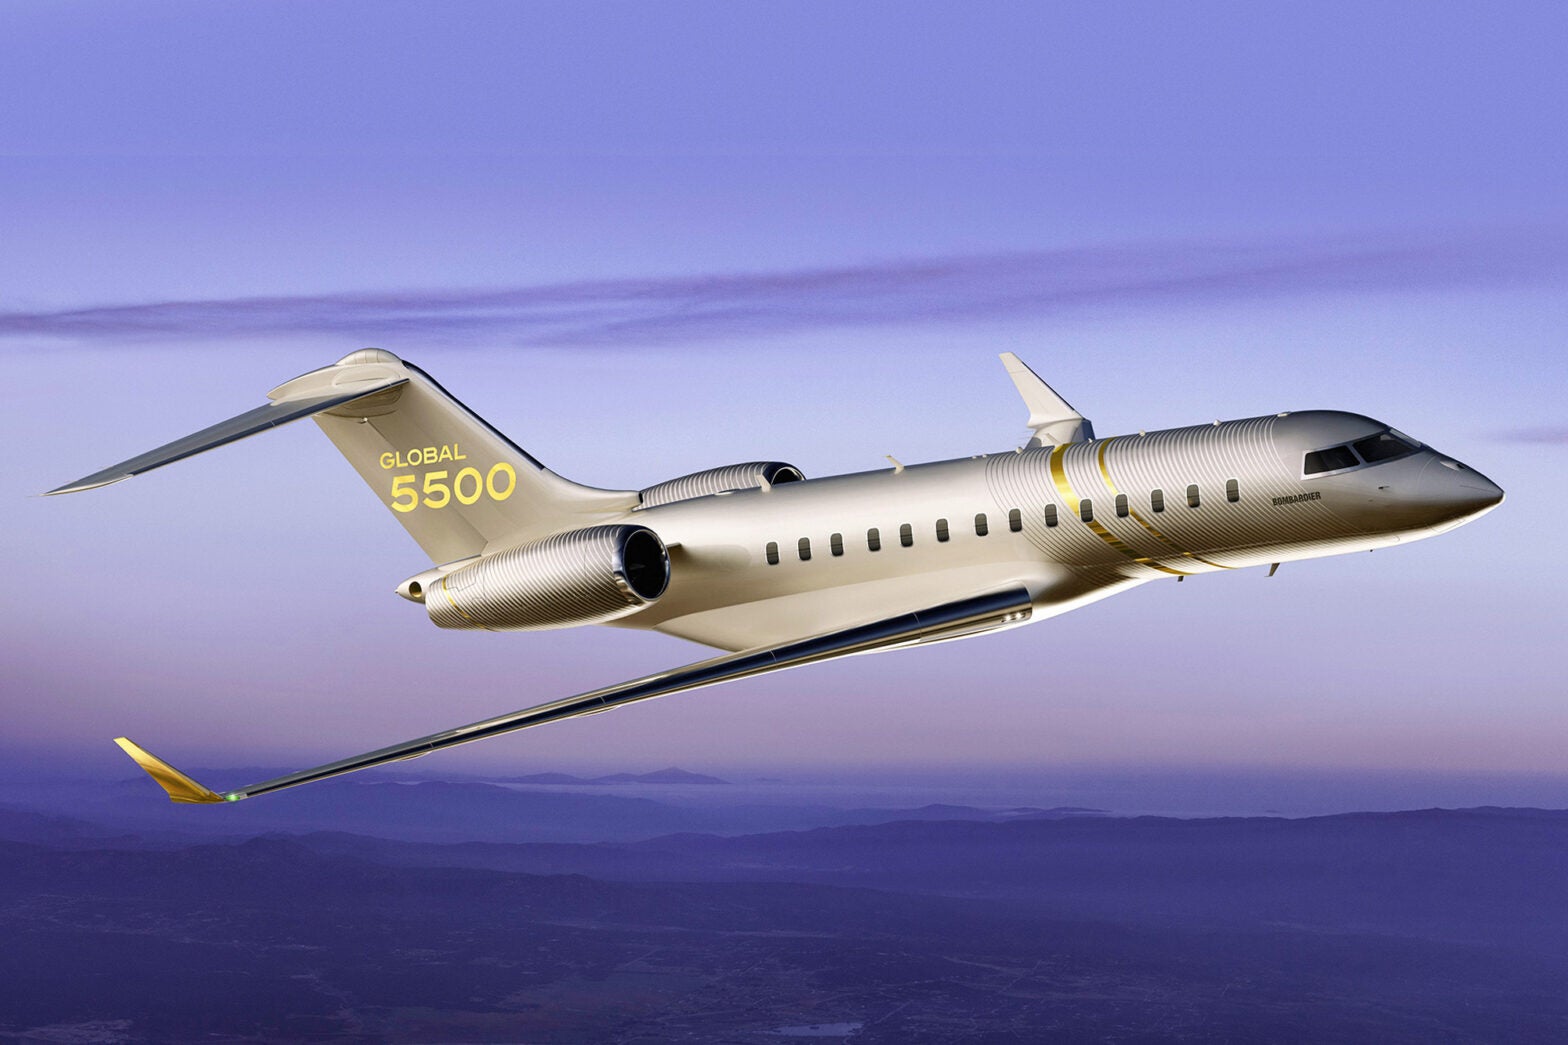 Bombardier’s Long-range Global 5500 Enters Service